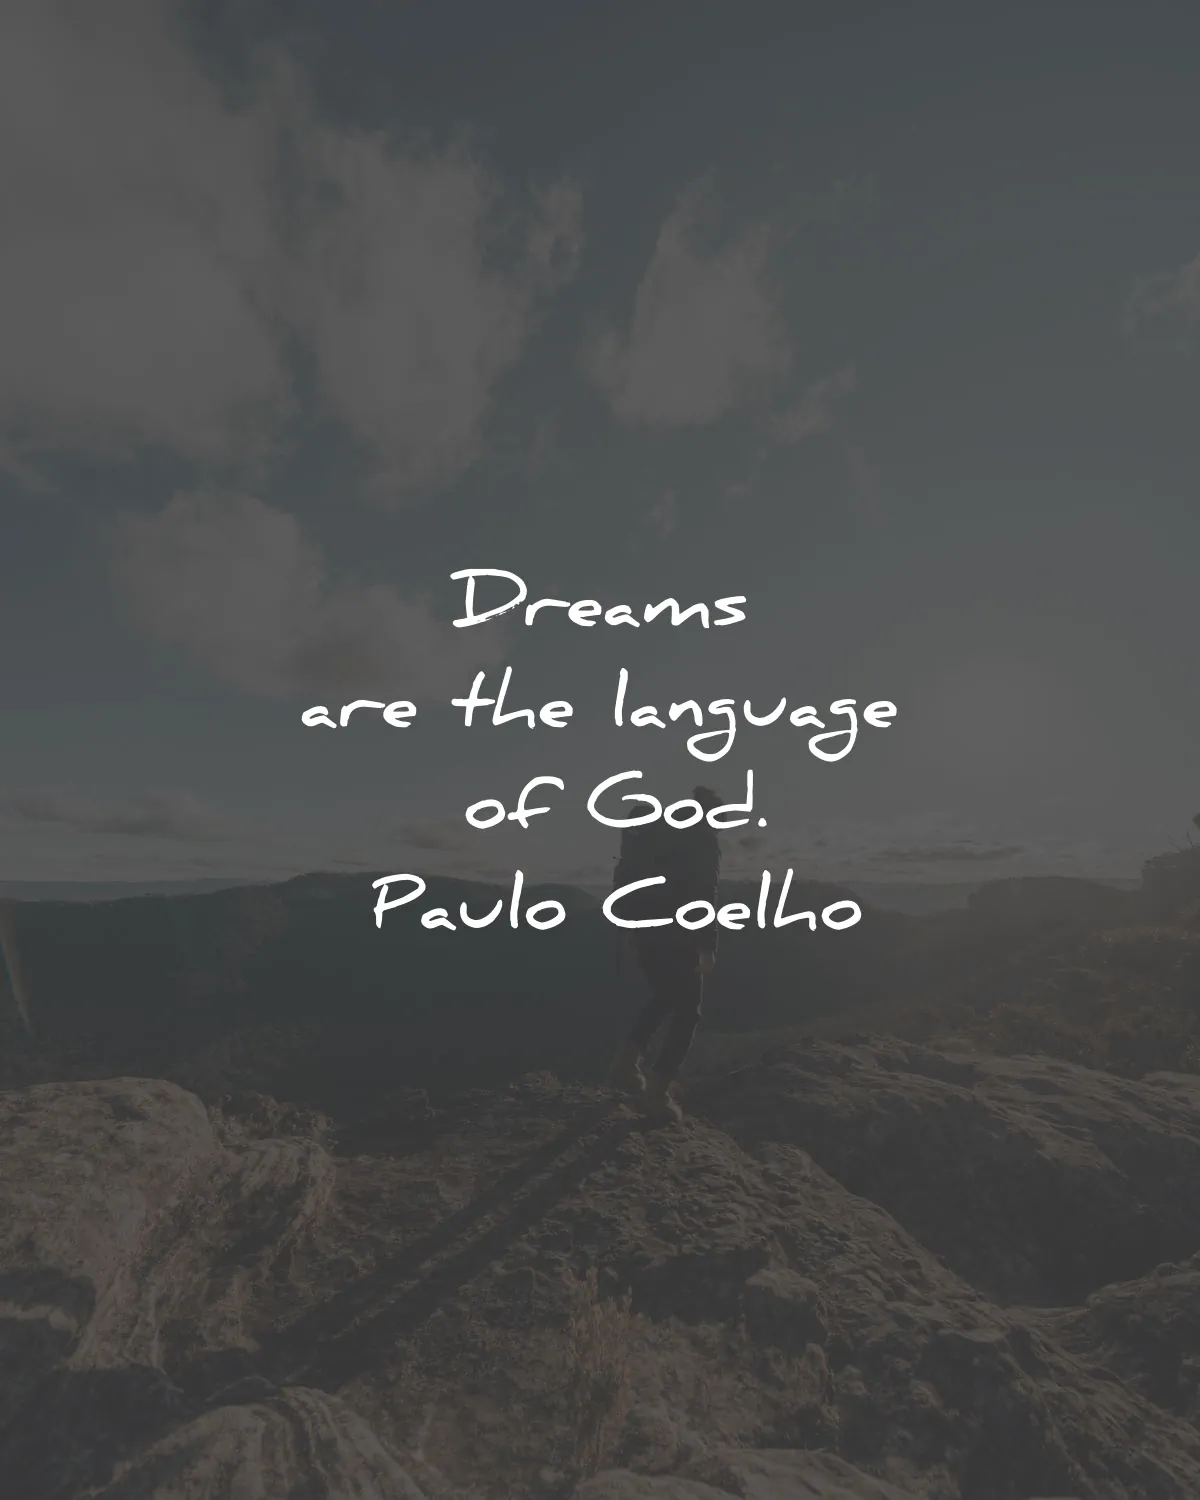 the alchemist quotes paulo coelho dreams language god wisdom